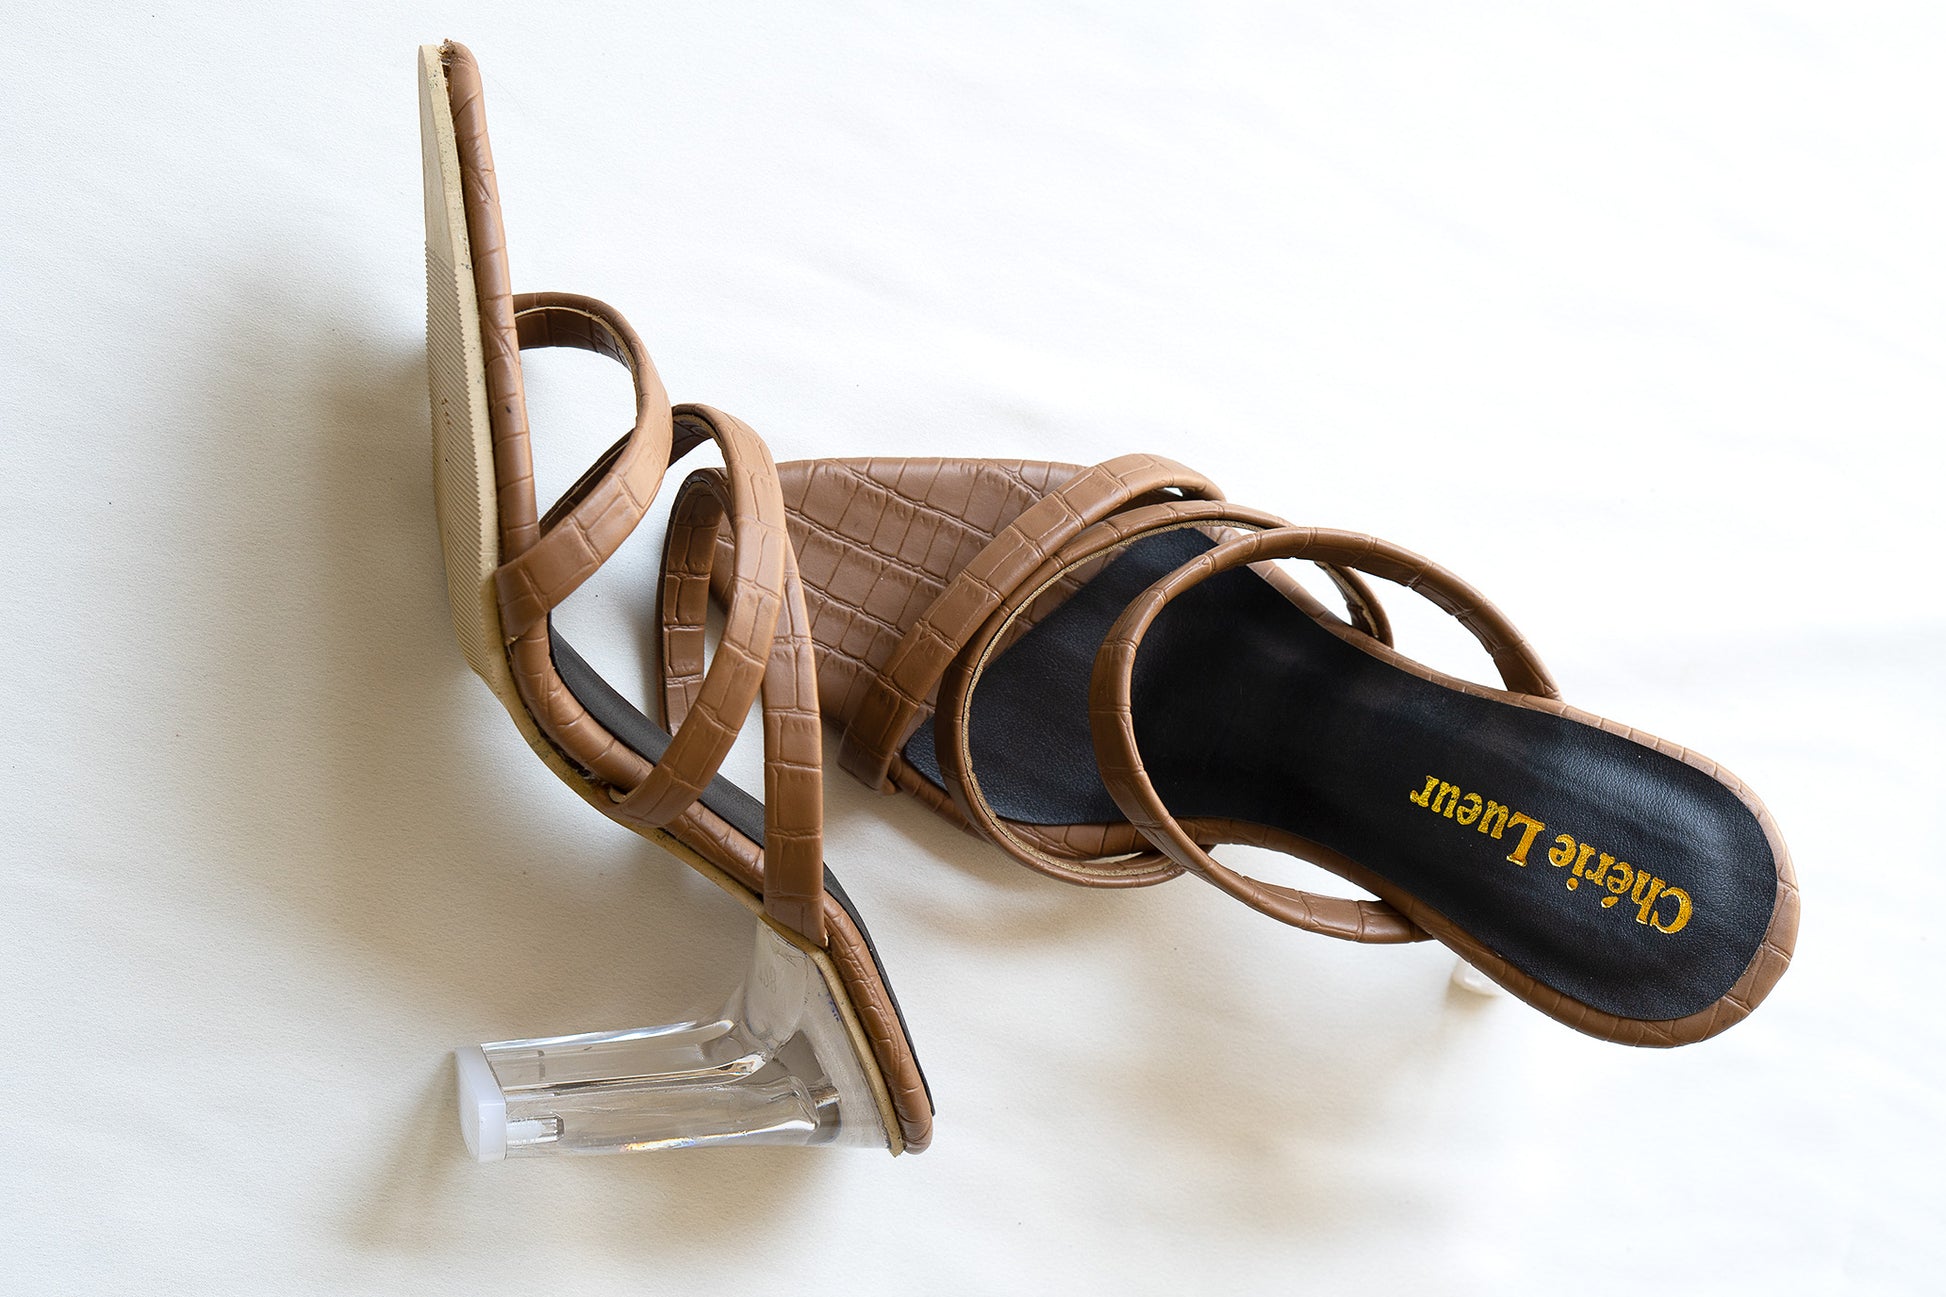 Chic Tan crocodile-print heel with a sleek 3-inch transparent heel